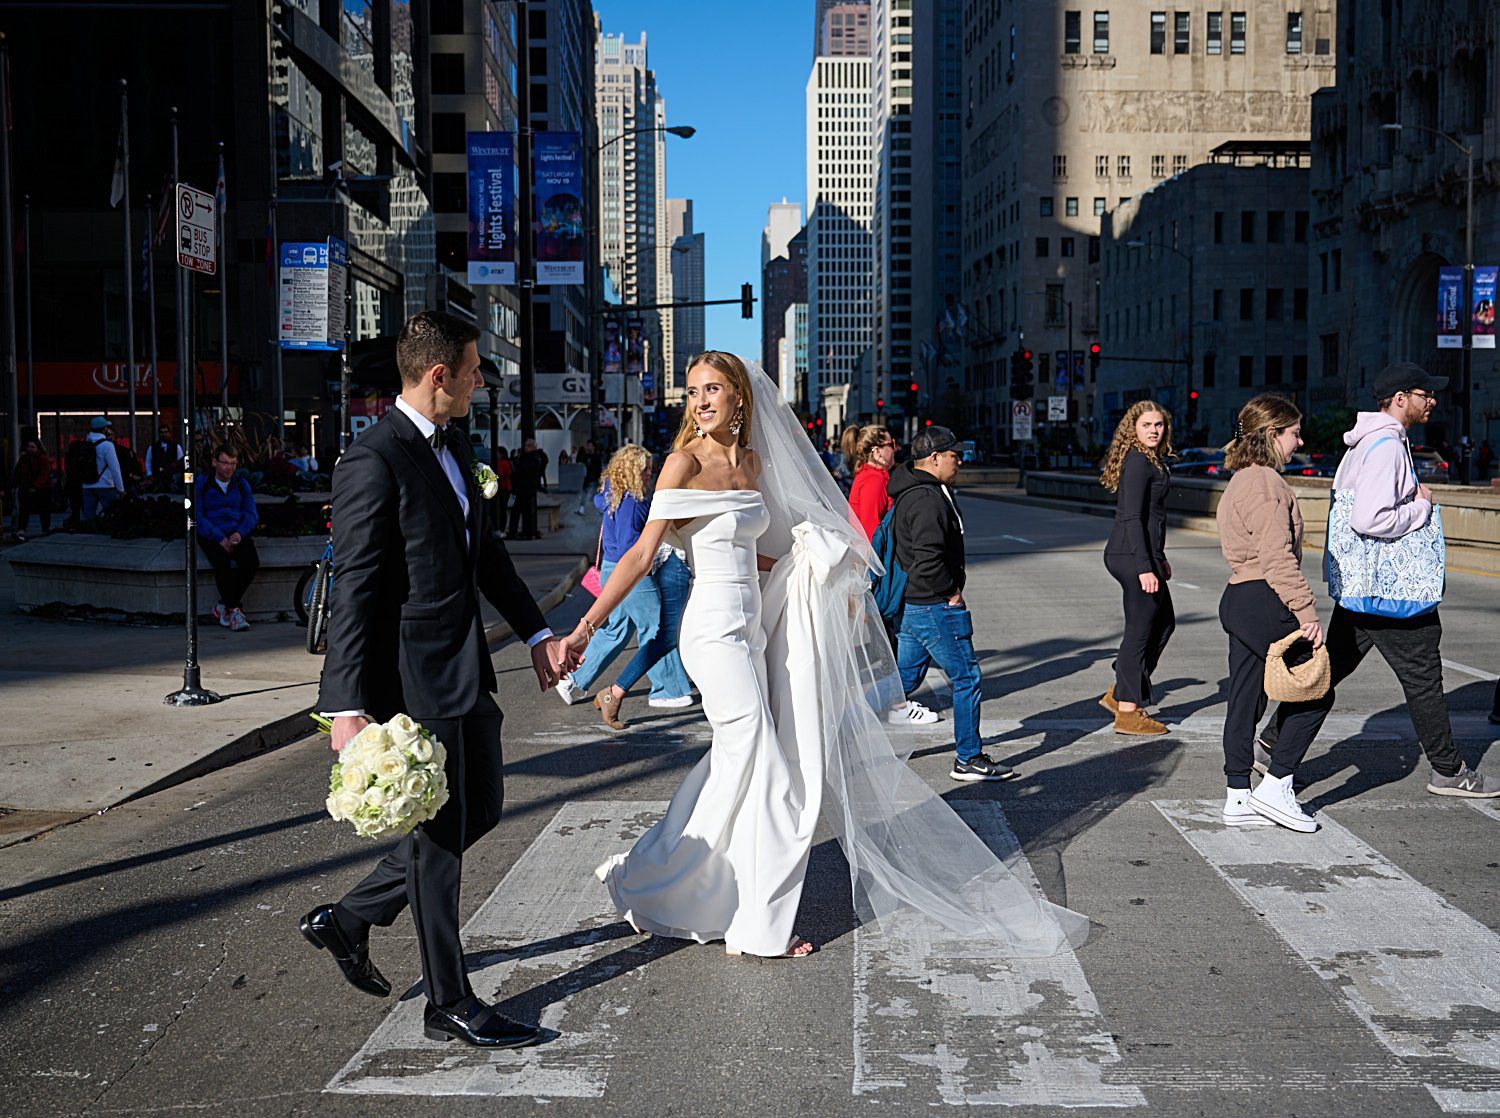 chicago langham wedding photography outside Michigan avenue